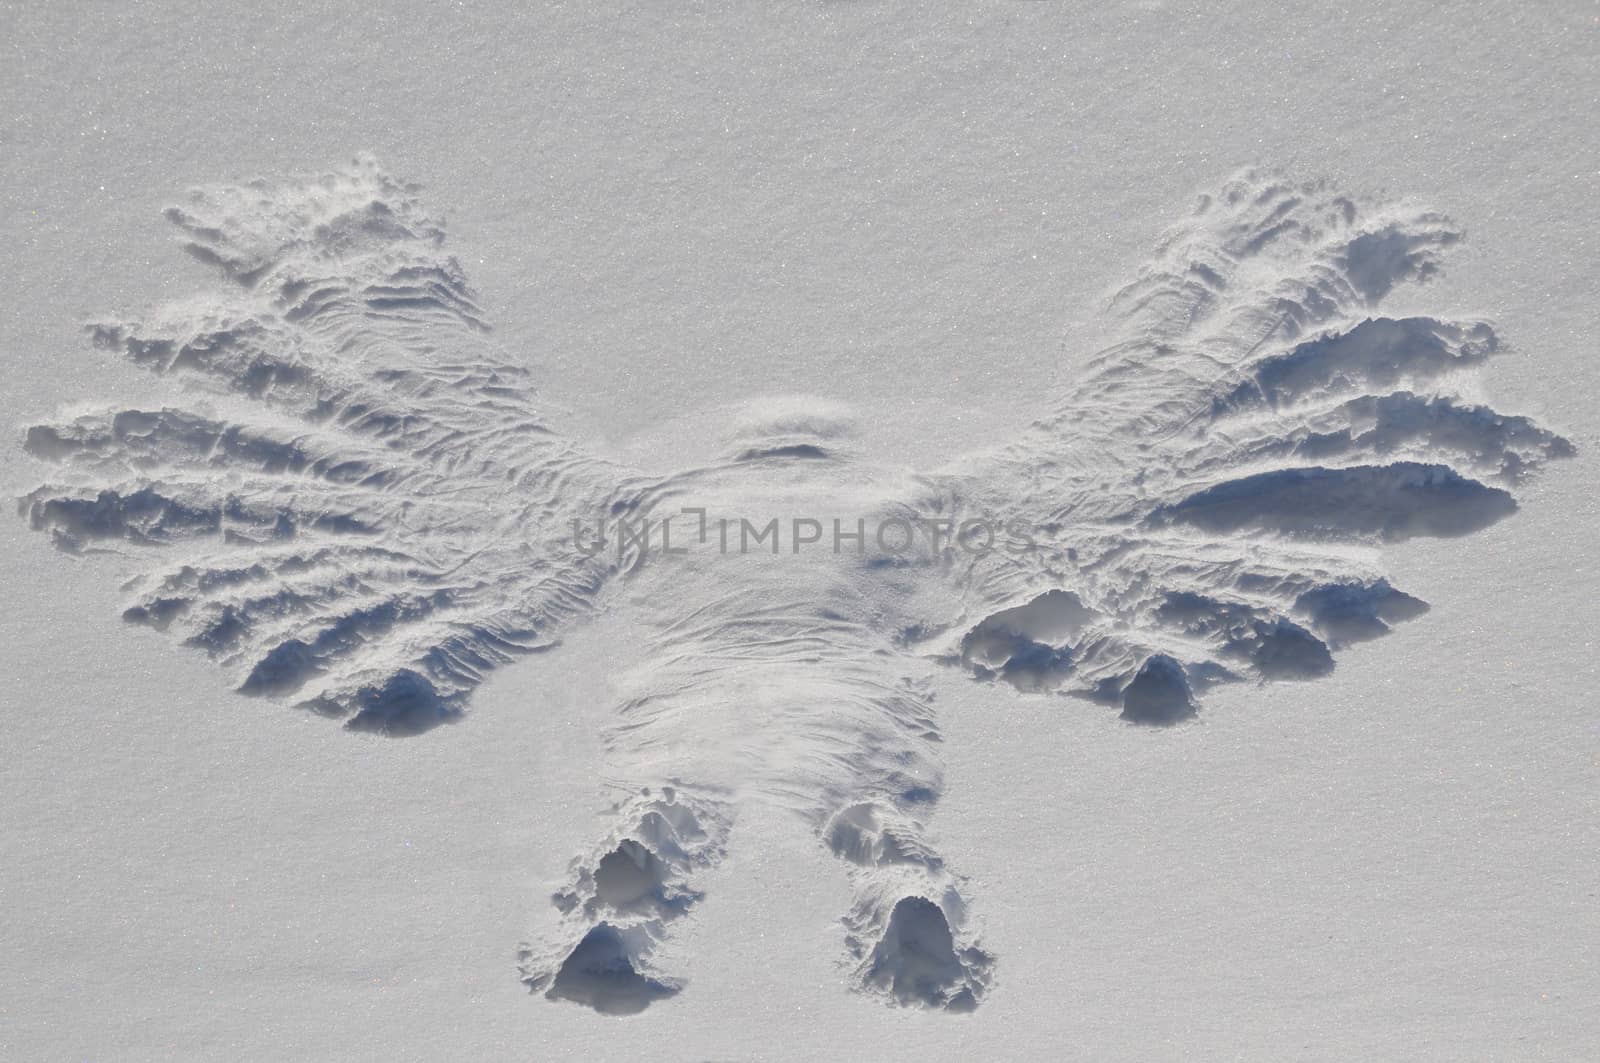 Rebirth of Snow Angel by ignattexx